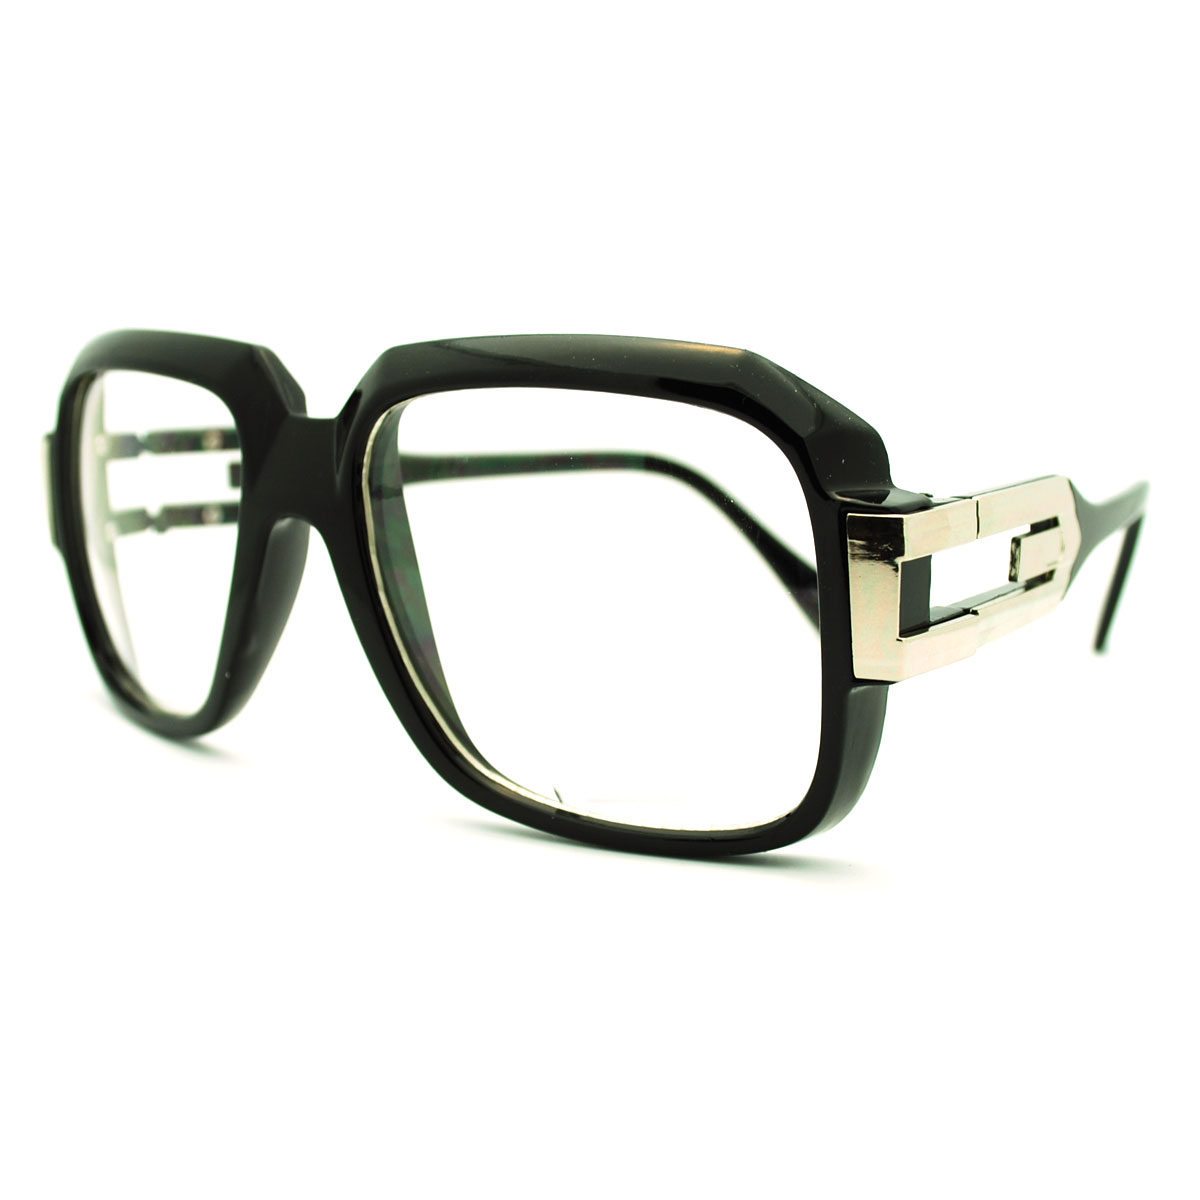 Mens Hip Hop Rapper Gazelle Rectangular nerdy 80s Geek Clear Lens Glasses | eBay